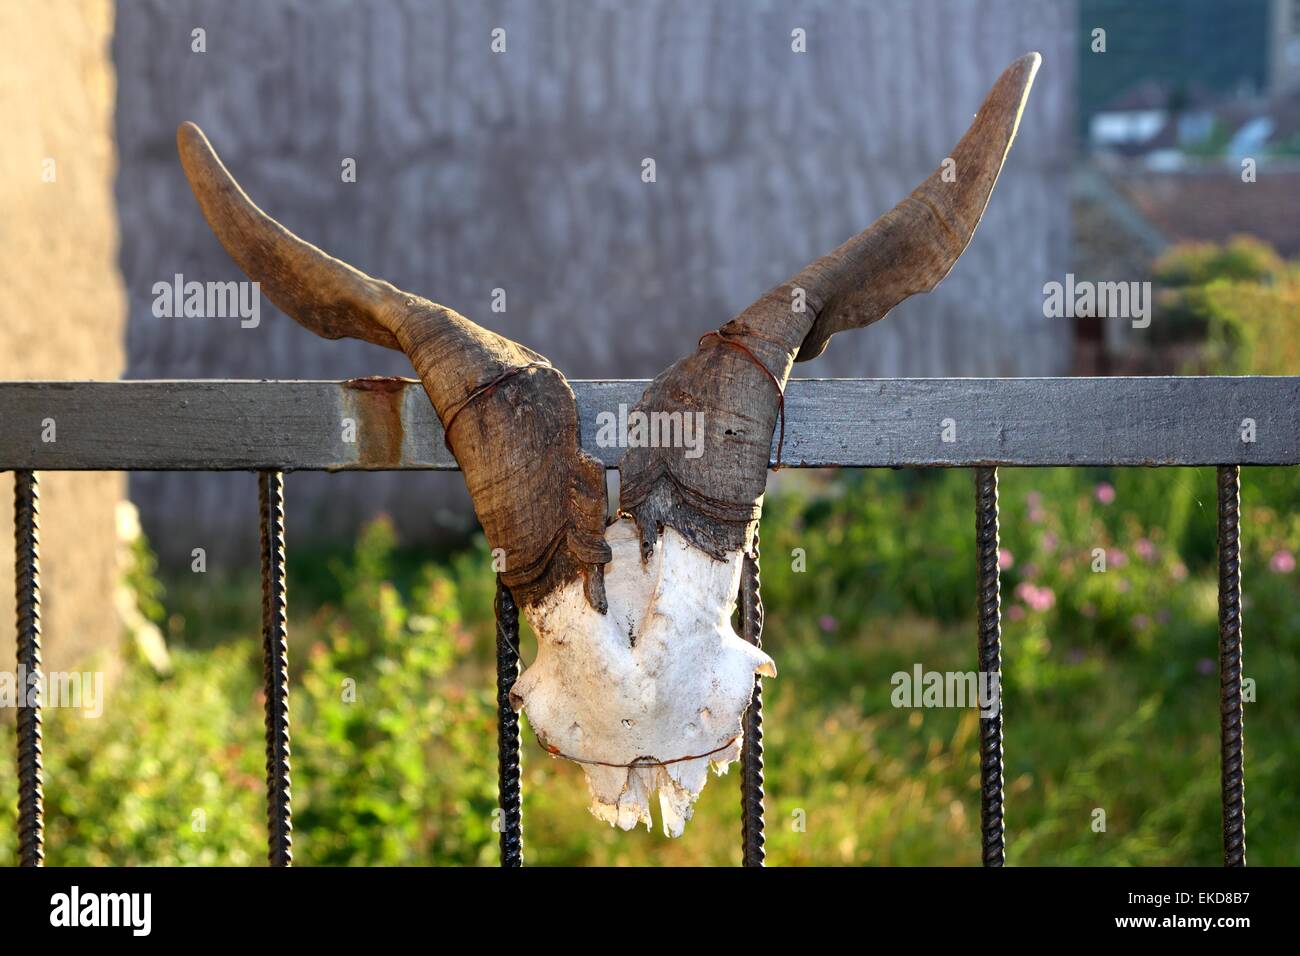 Goat Horn Fruchtbarkeit Symbol Metapher gebunden in Tür Stockfoto